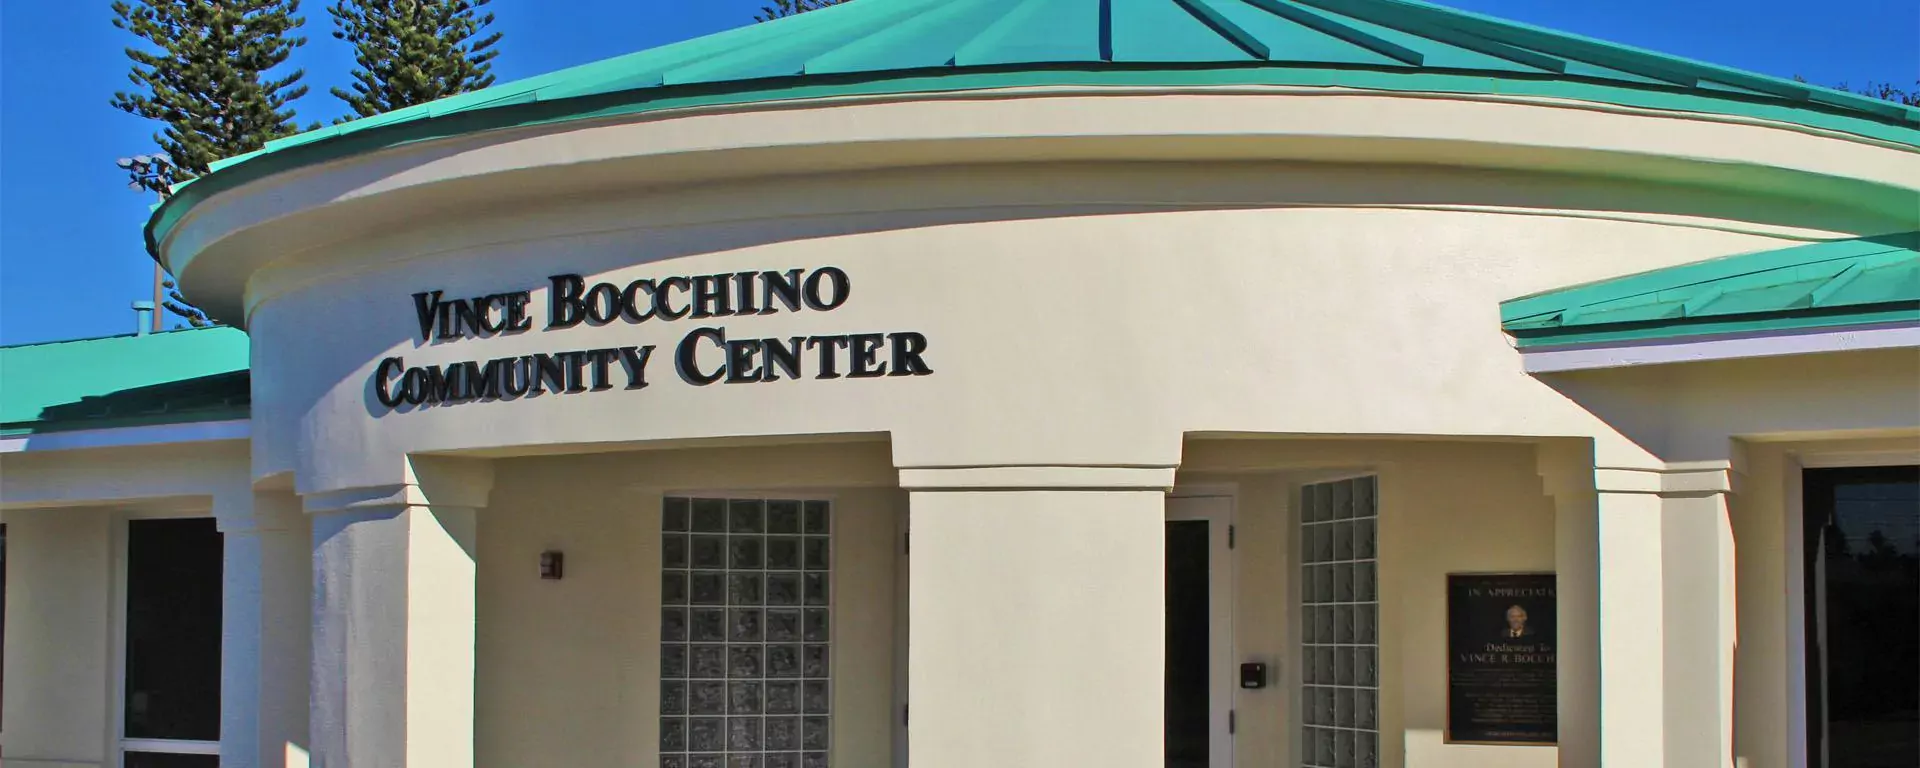 Vince Bocchino Community Center 